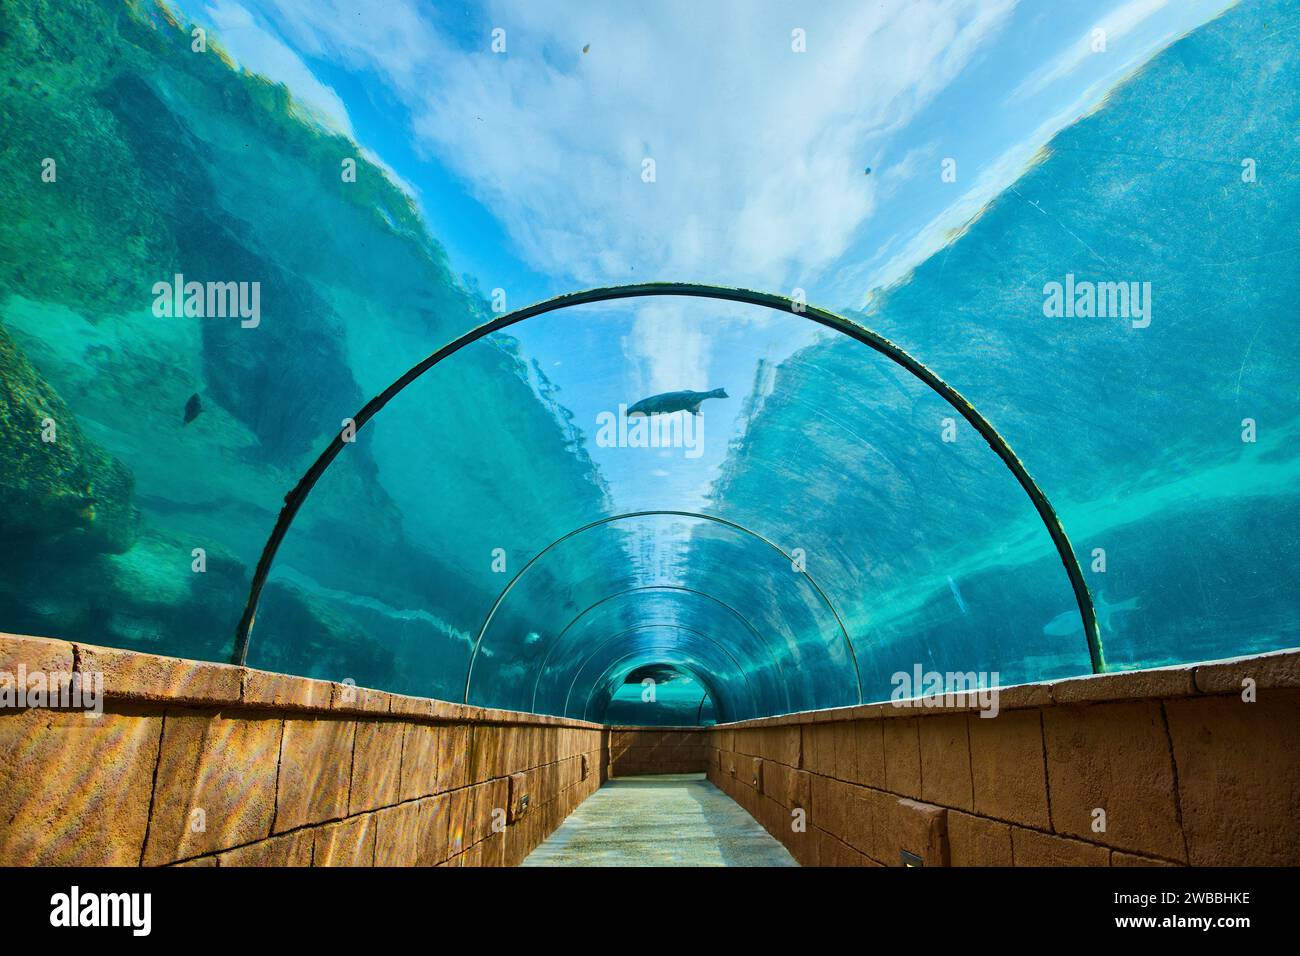 Aquatic Life in Underwater Tunnel Aquarium with Swimming Shark Stock Photo